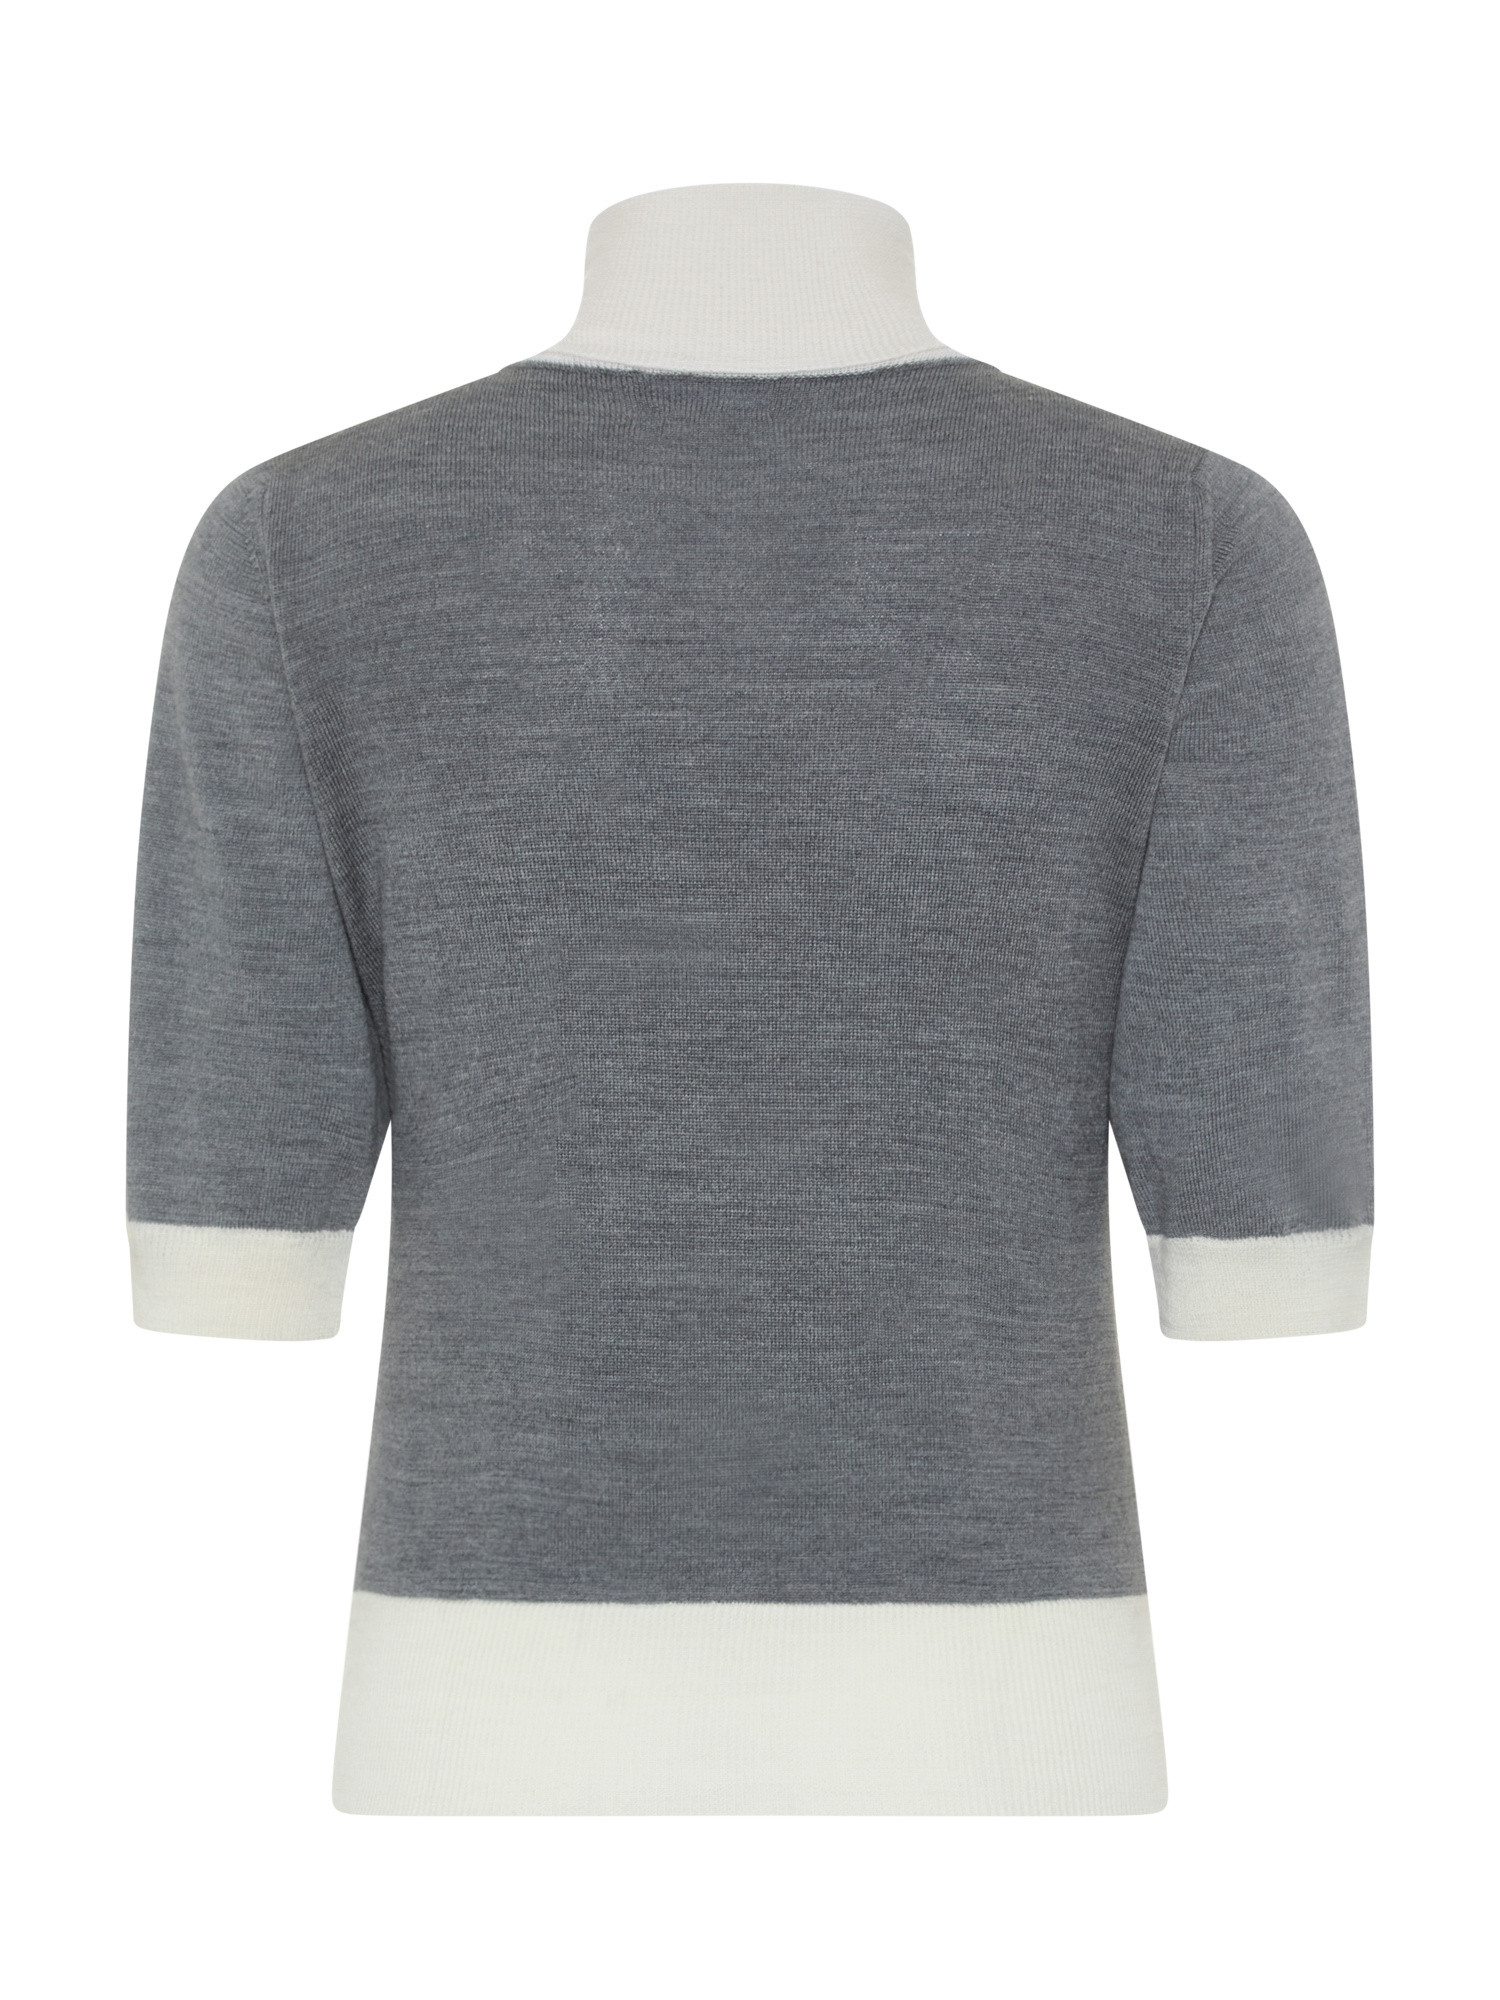 Koan - Turtleneck in pure Merino wool, Grey, large image number 1